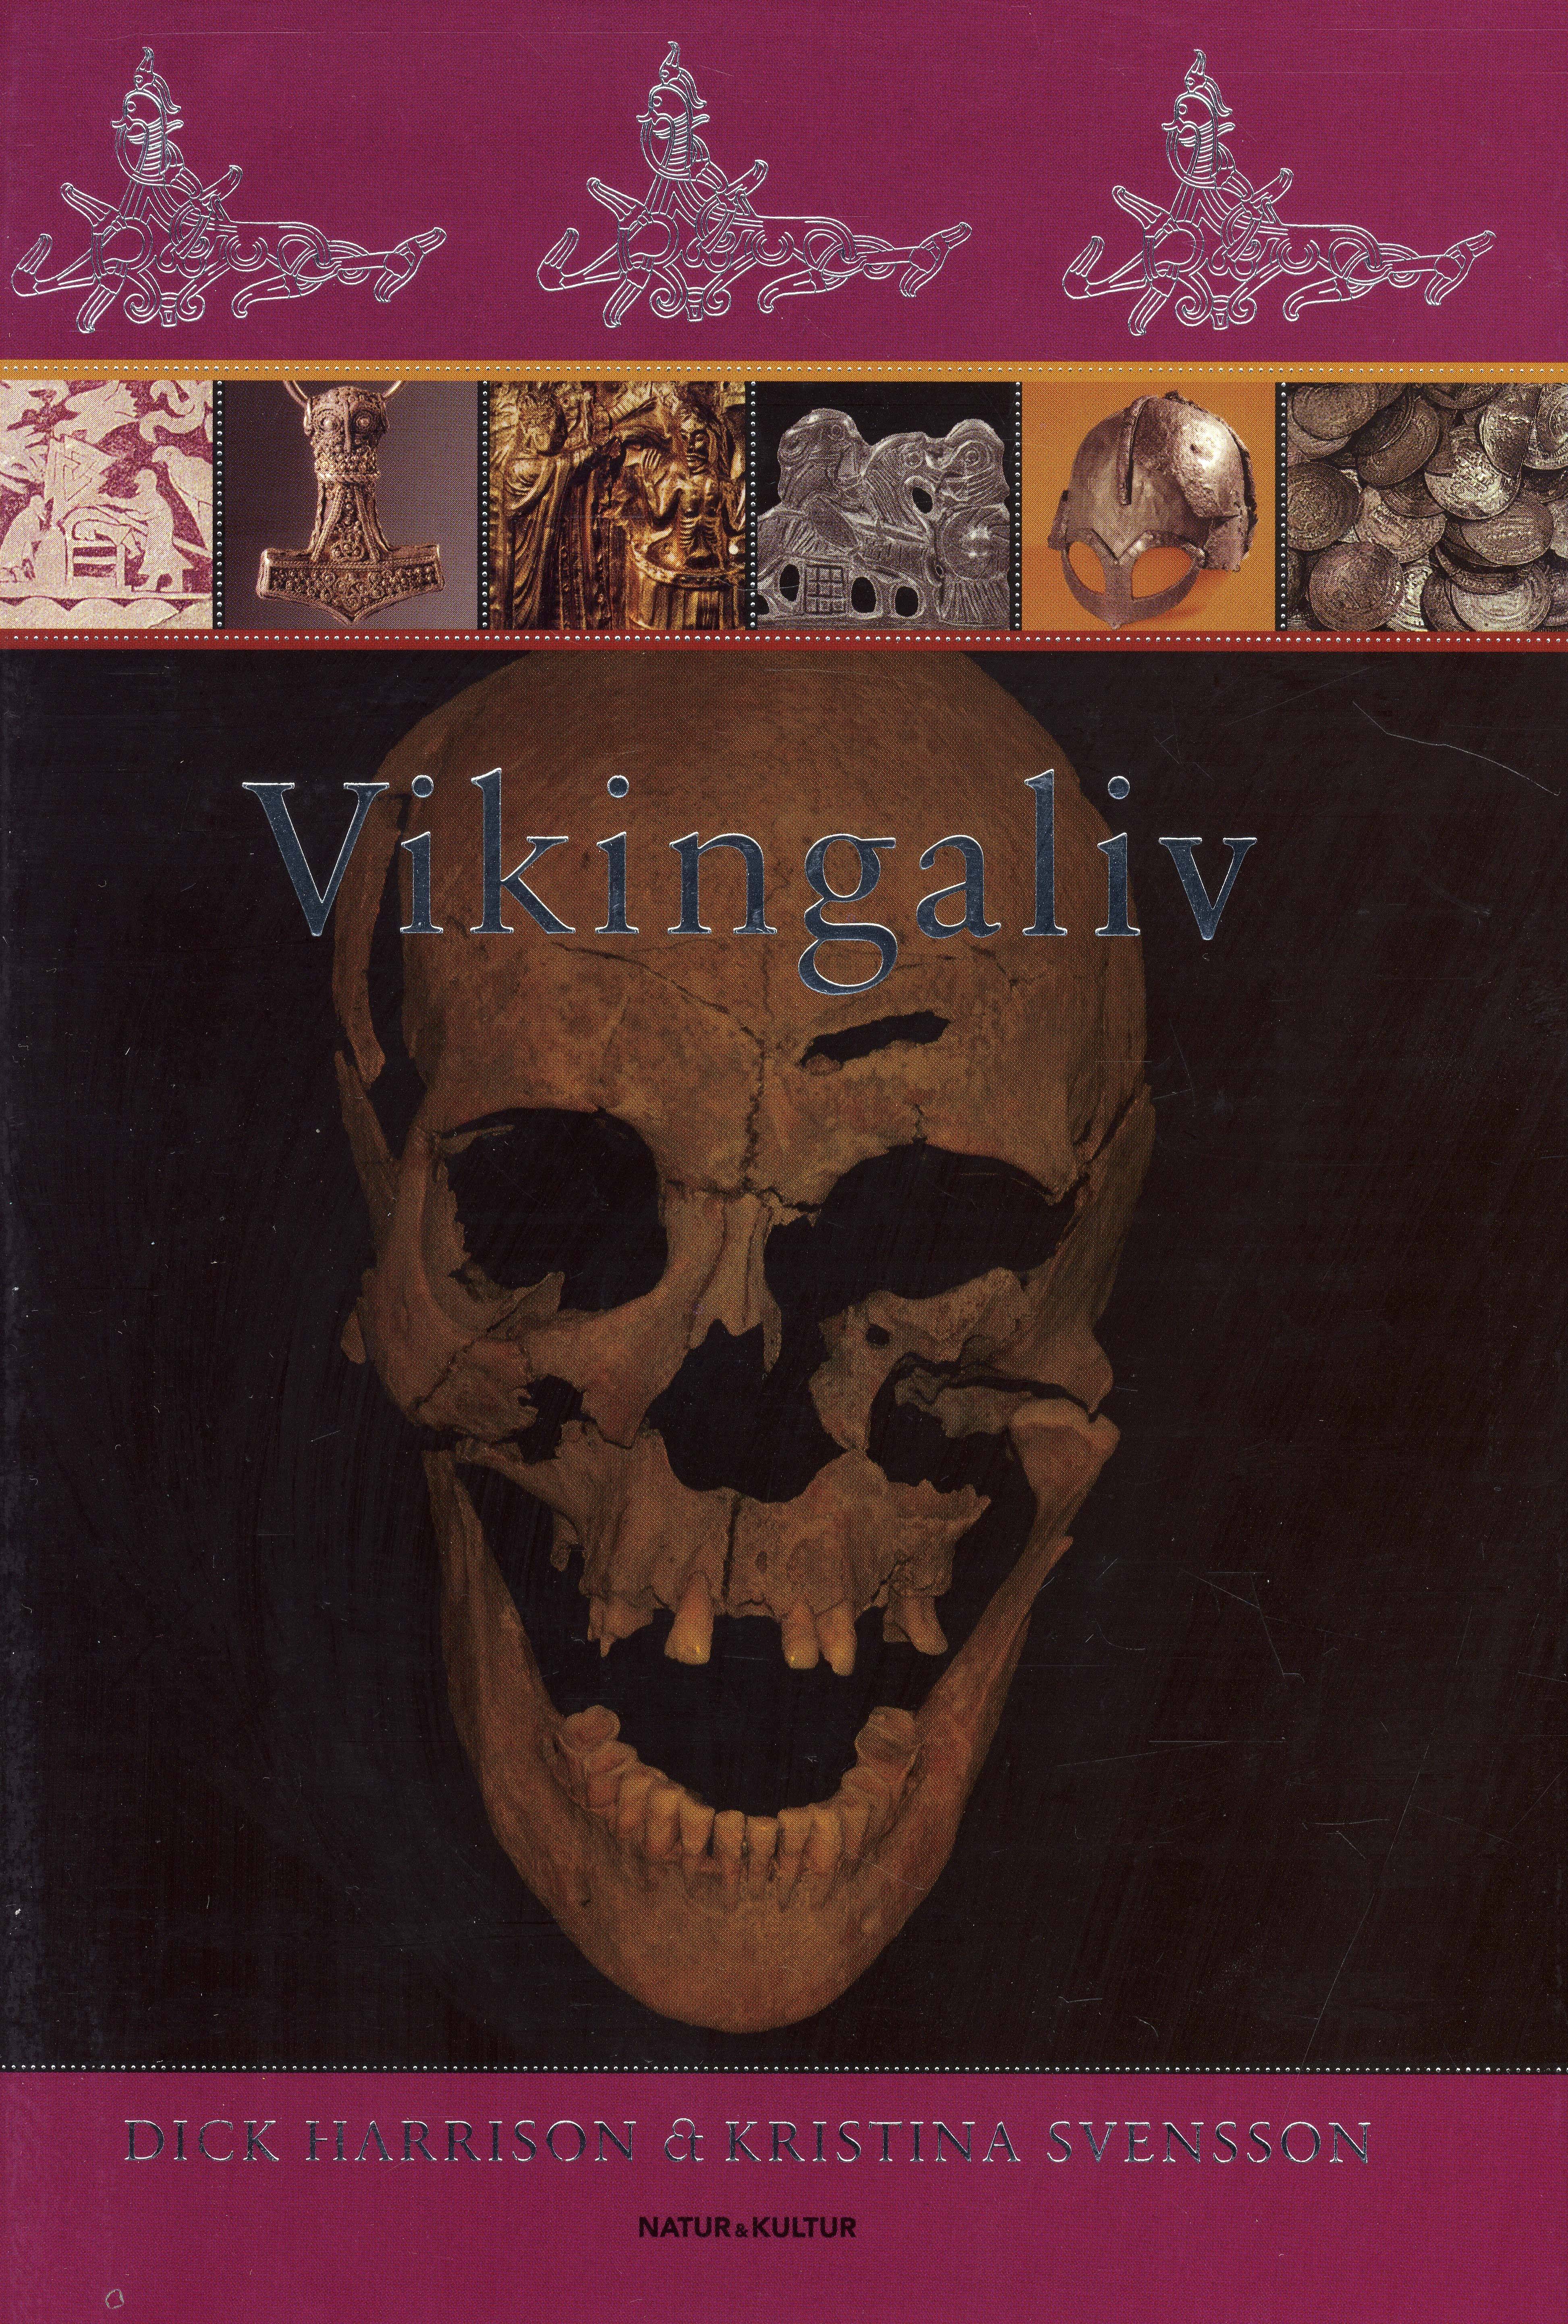 Vikingaliv